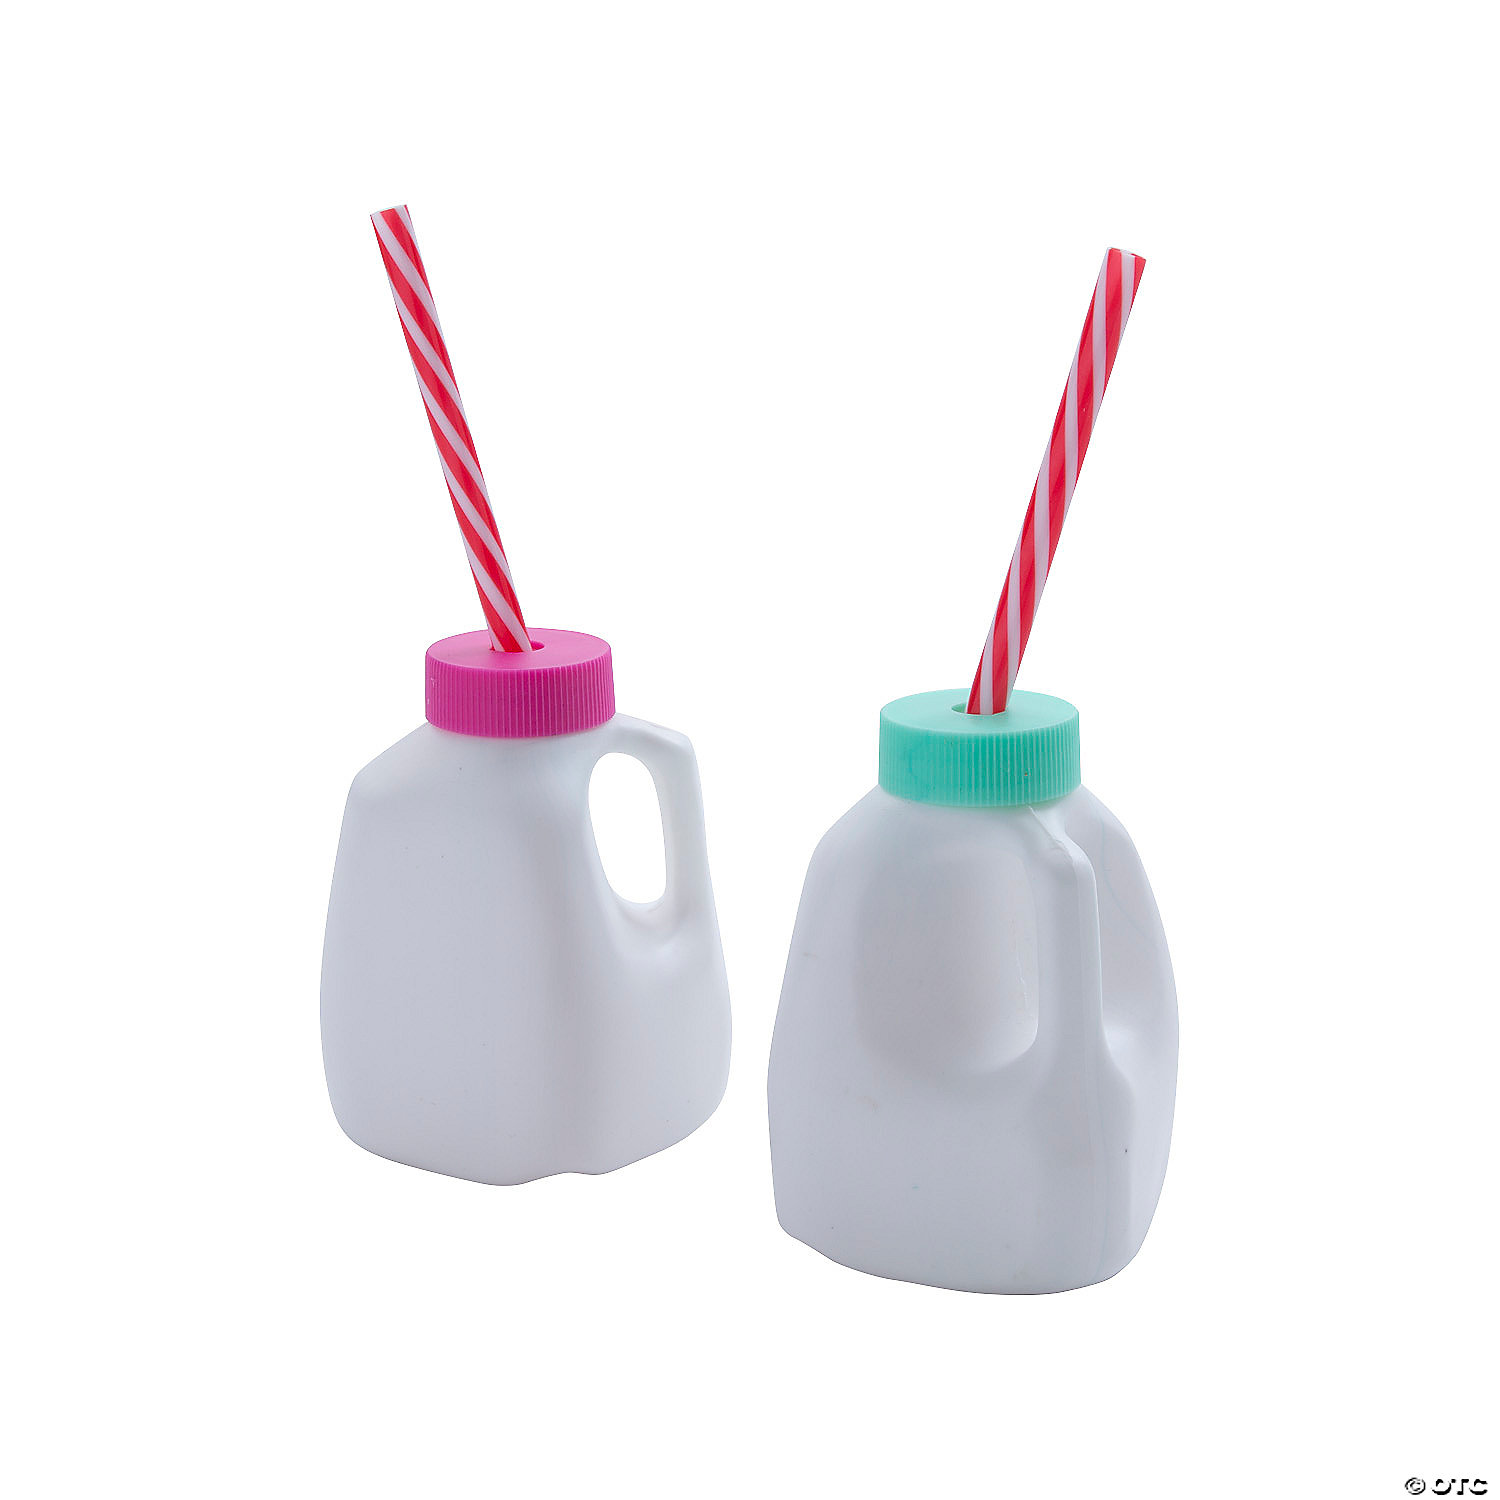 Mini Milk Carton-Shaped BPA-Free Plastic Cups with Lids & Straws